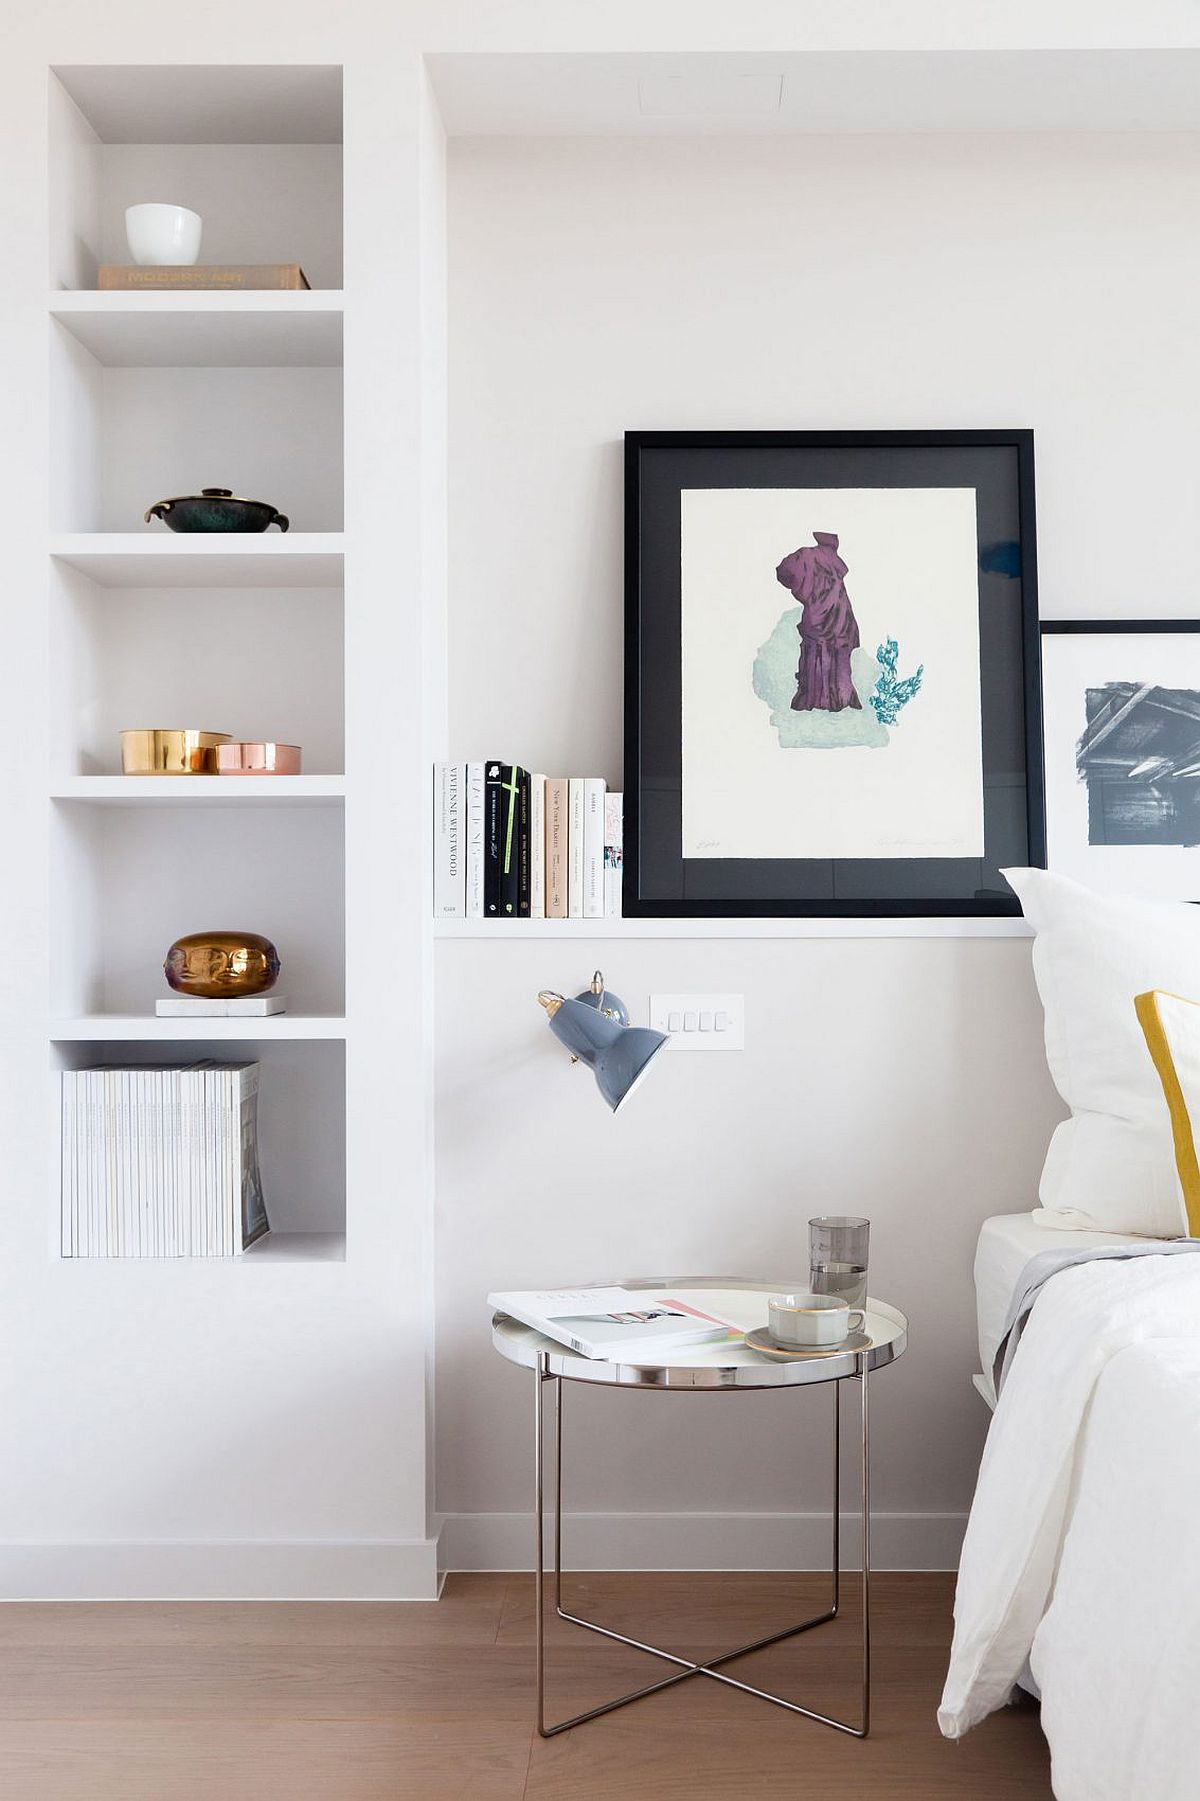 Small bedroom shelf and display idea